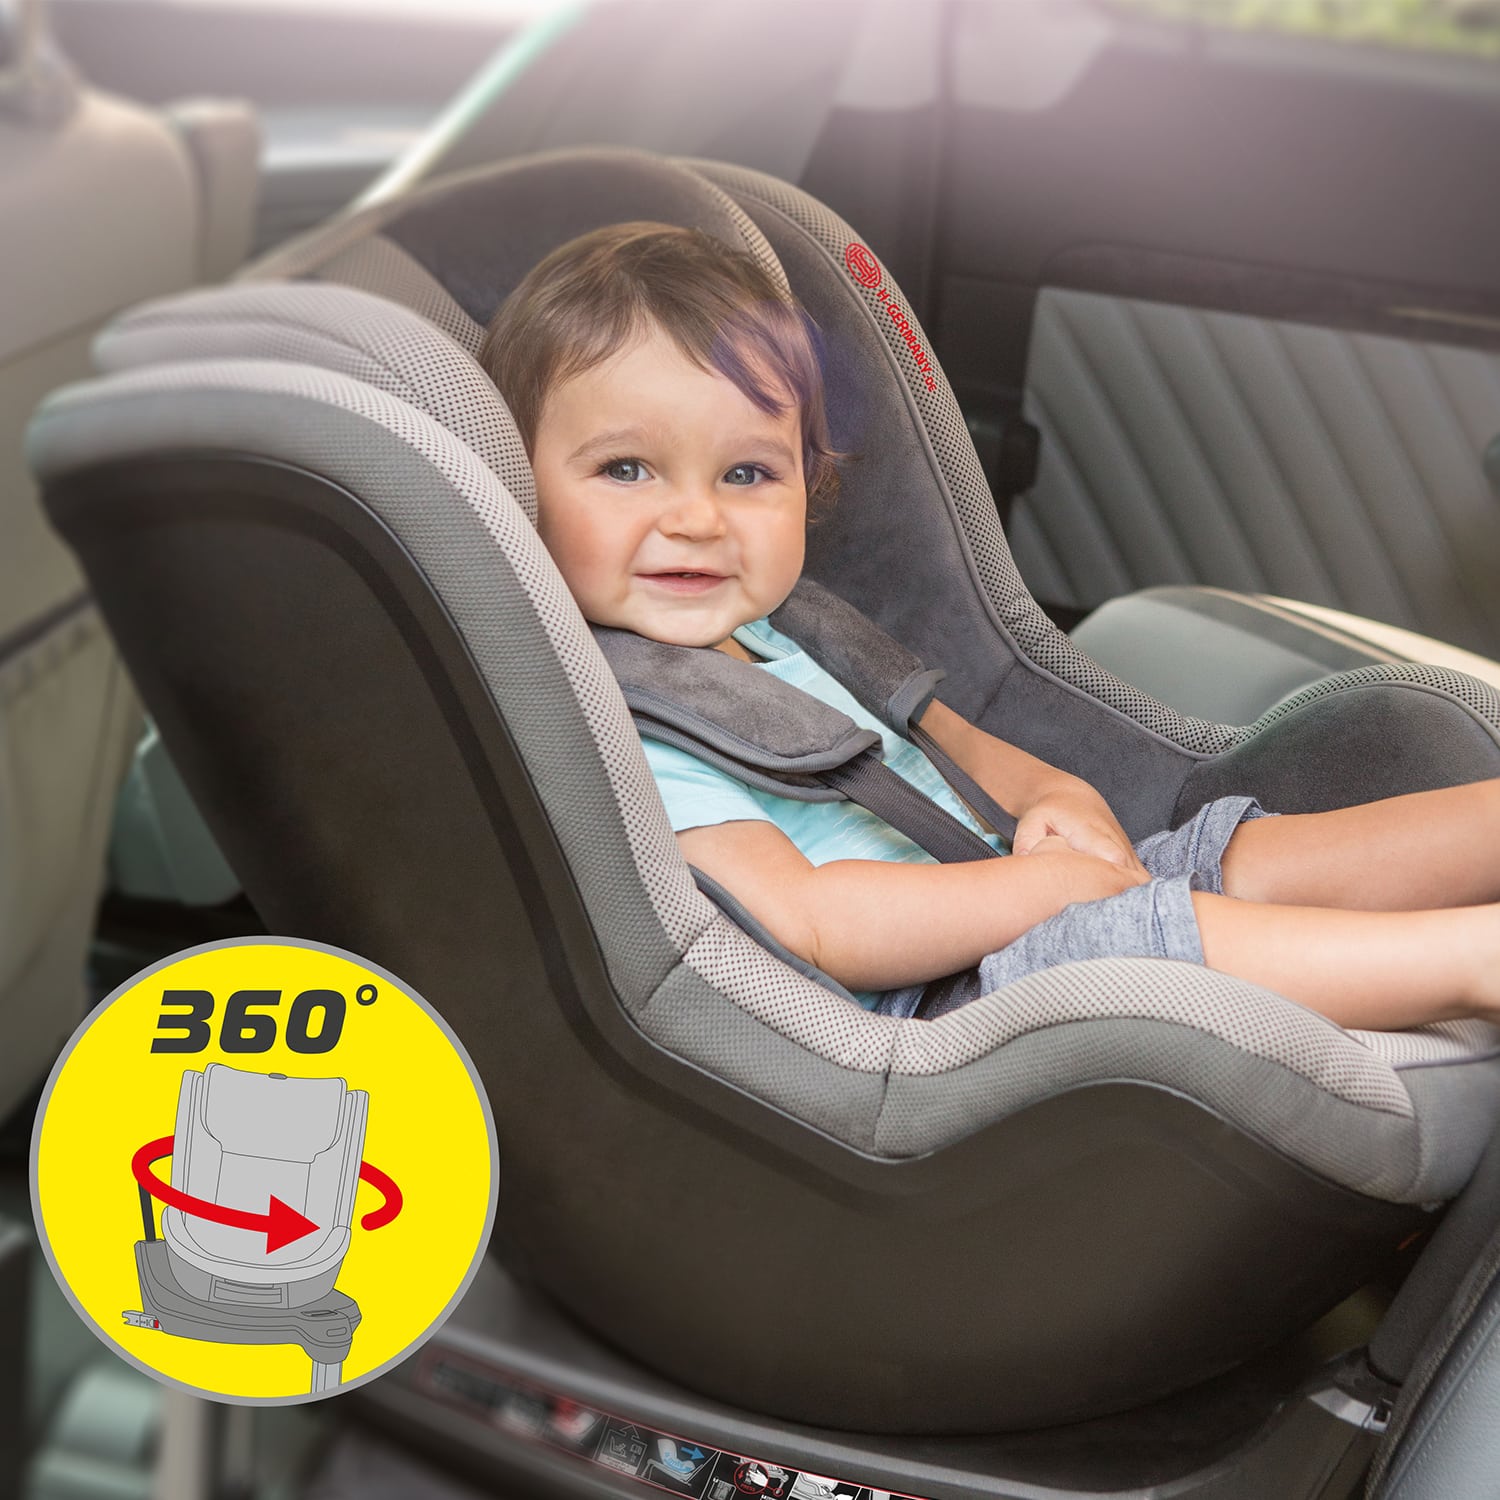 How to choose baby car seat for newborn. Capsule vs. convertible car seat